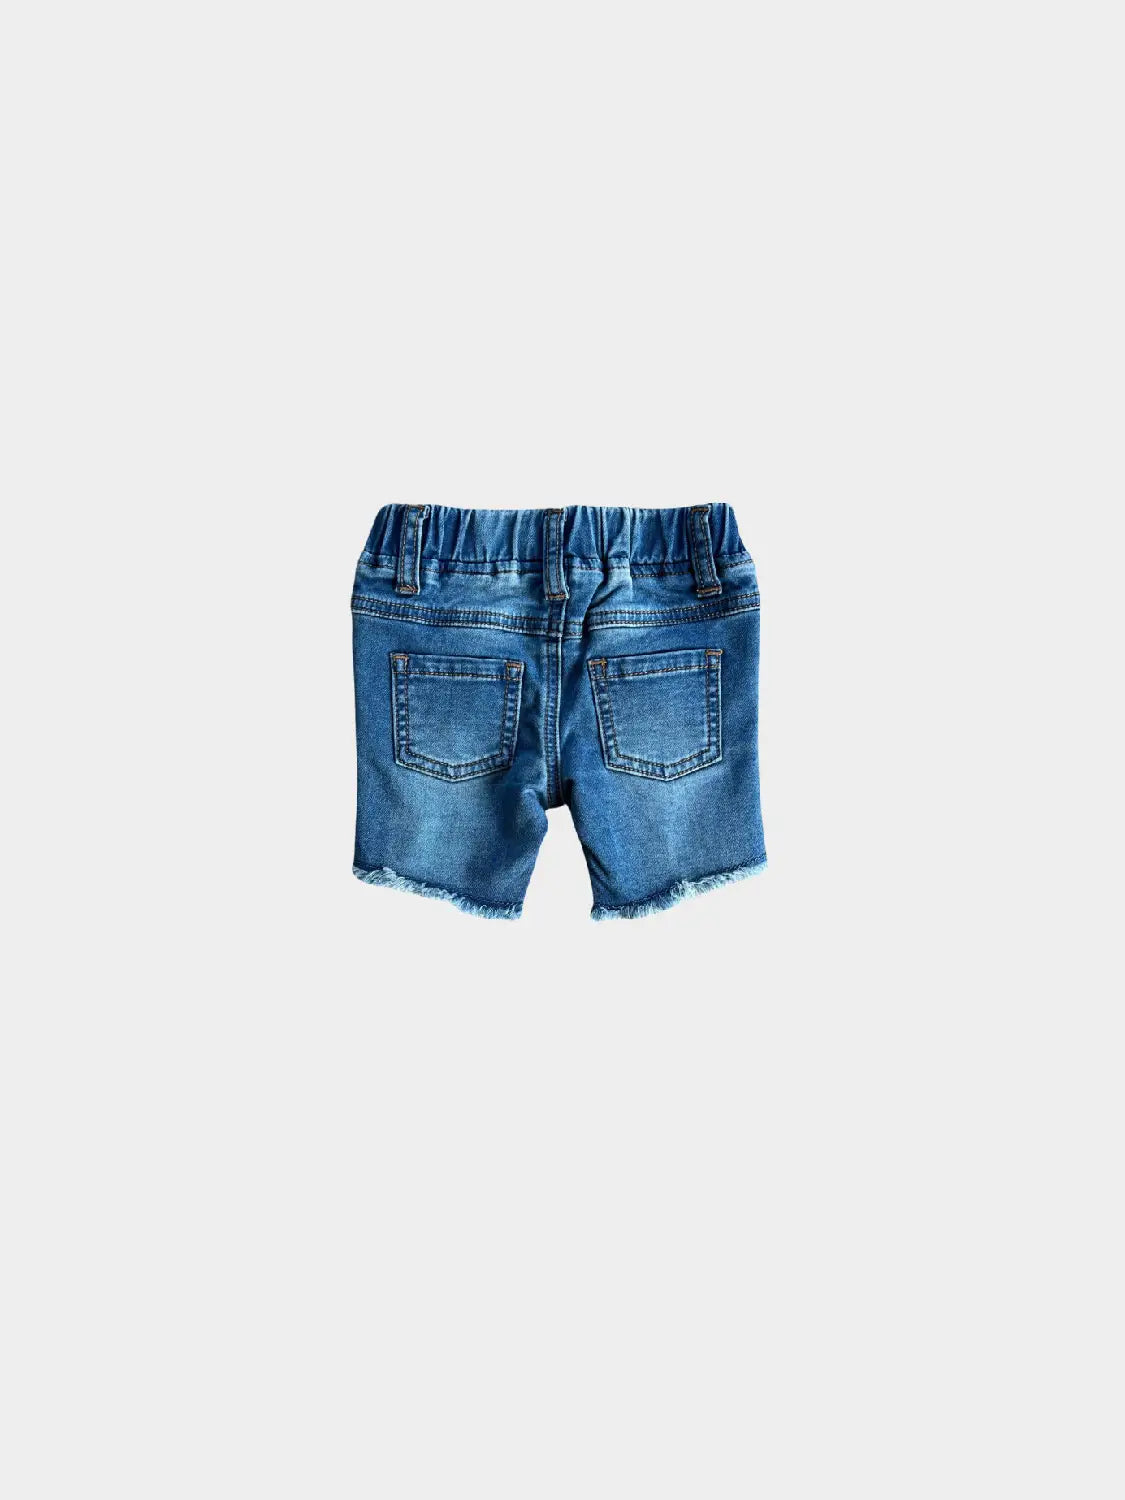 Babysprouts Clothing Company Boy's Denim Shorts - Mid Wash Blue